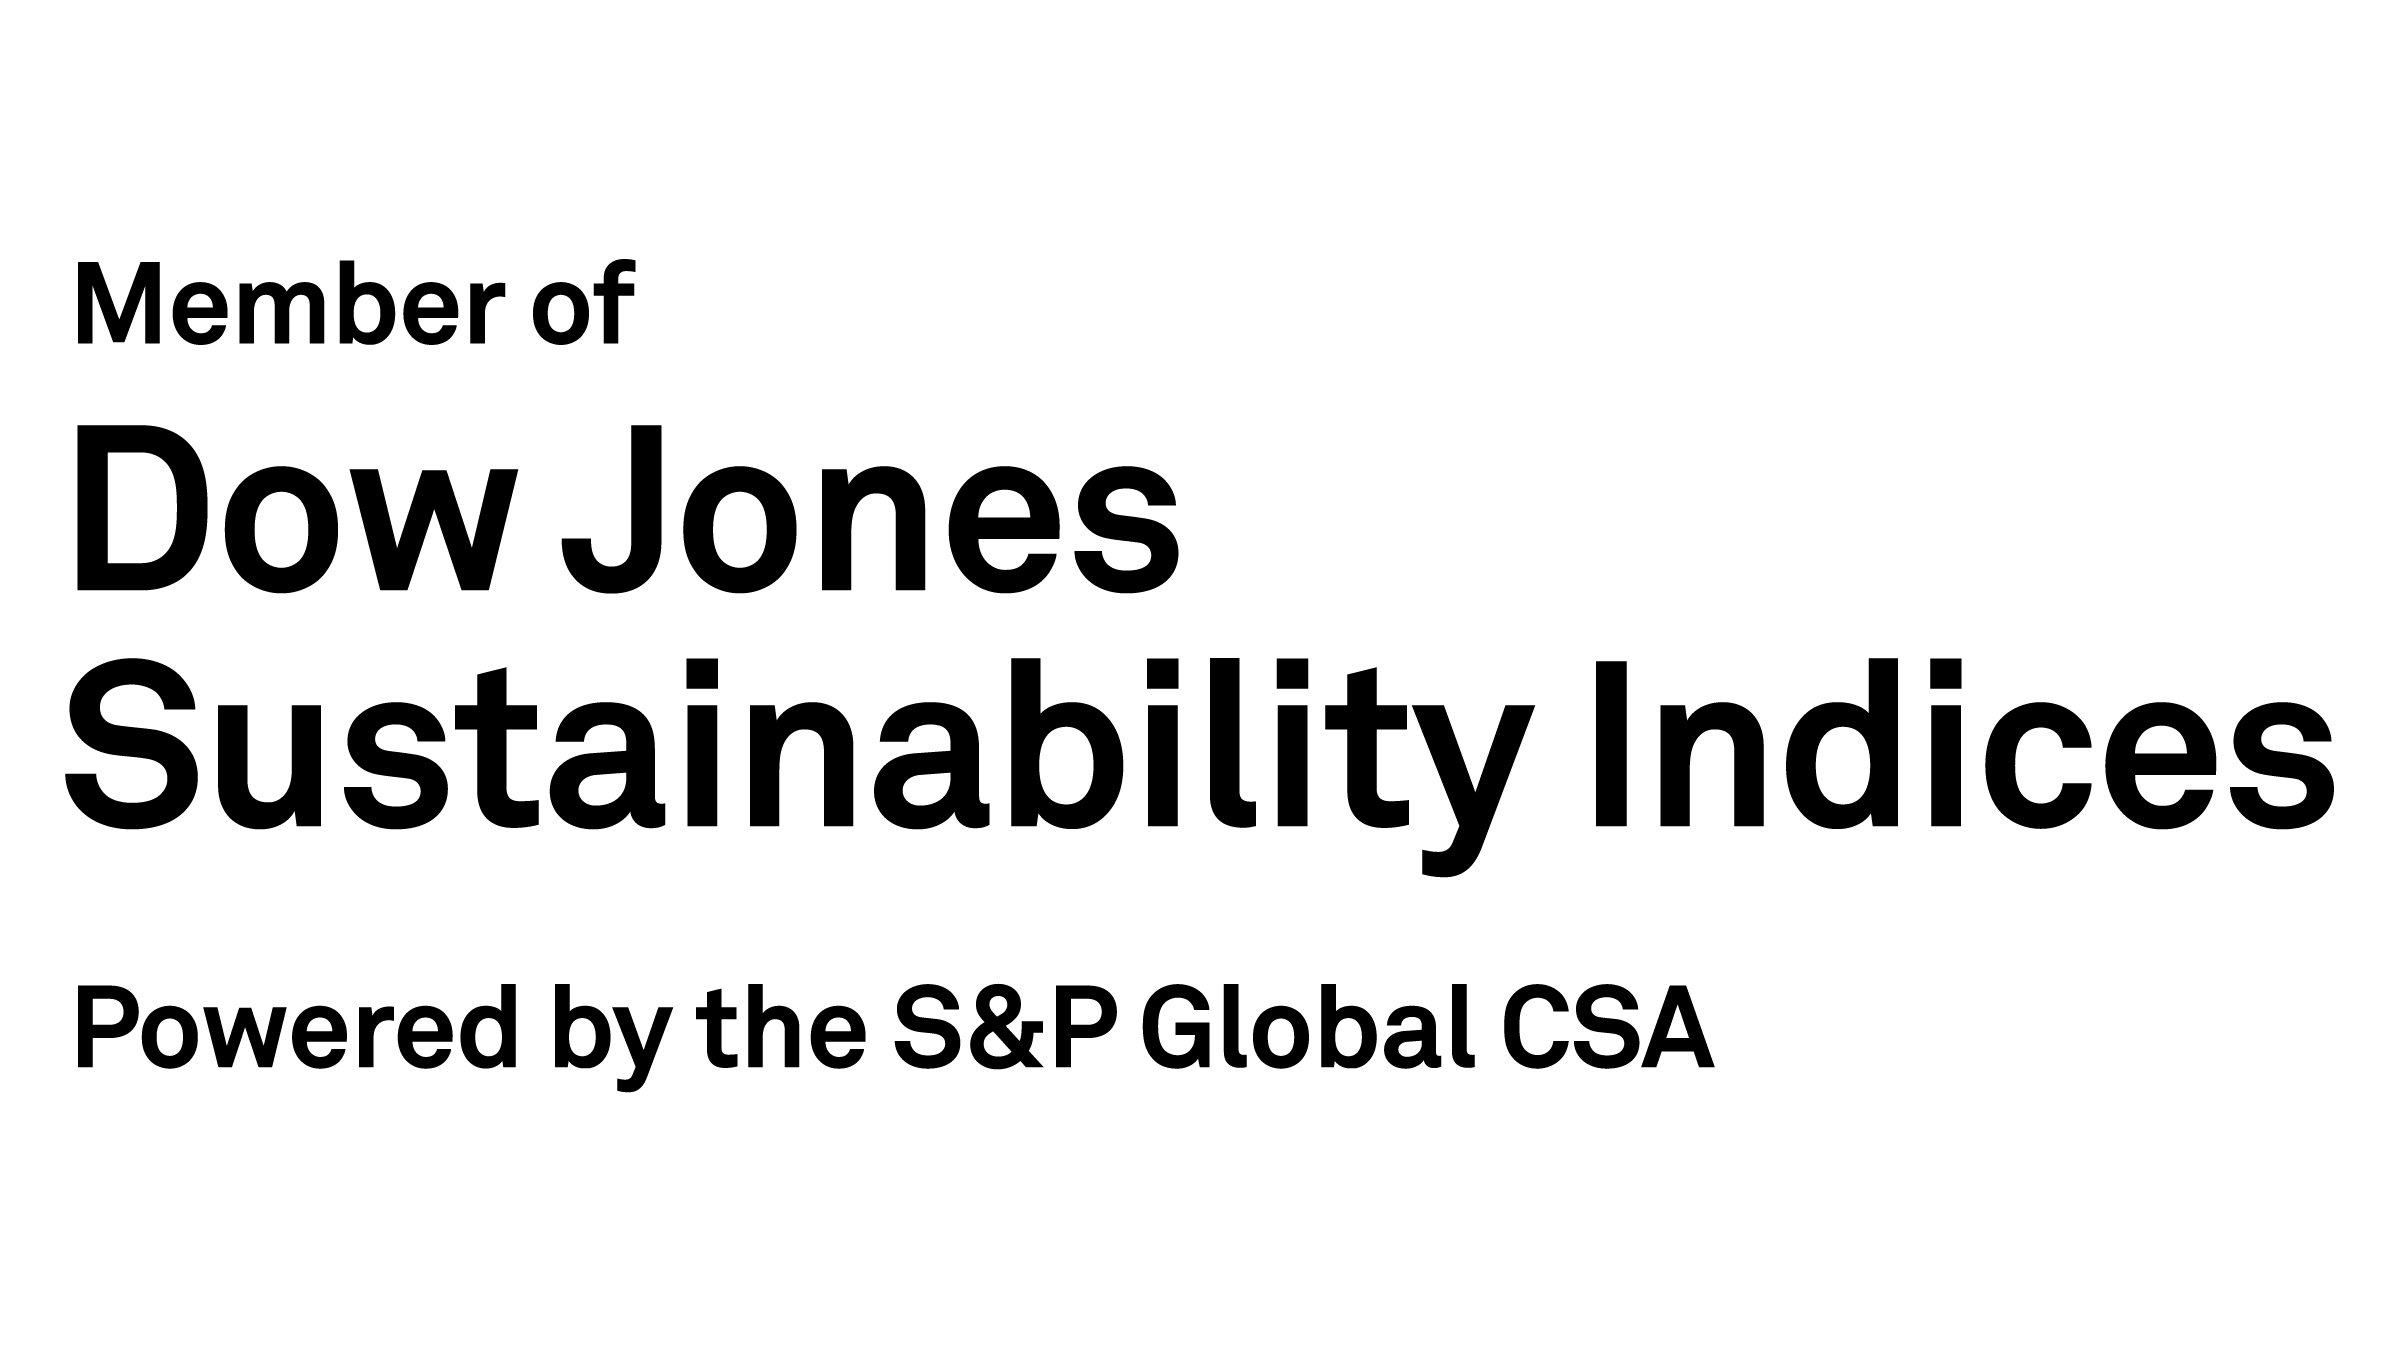 Member of Dow Jones Sustainability Indices mark